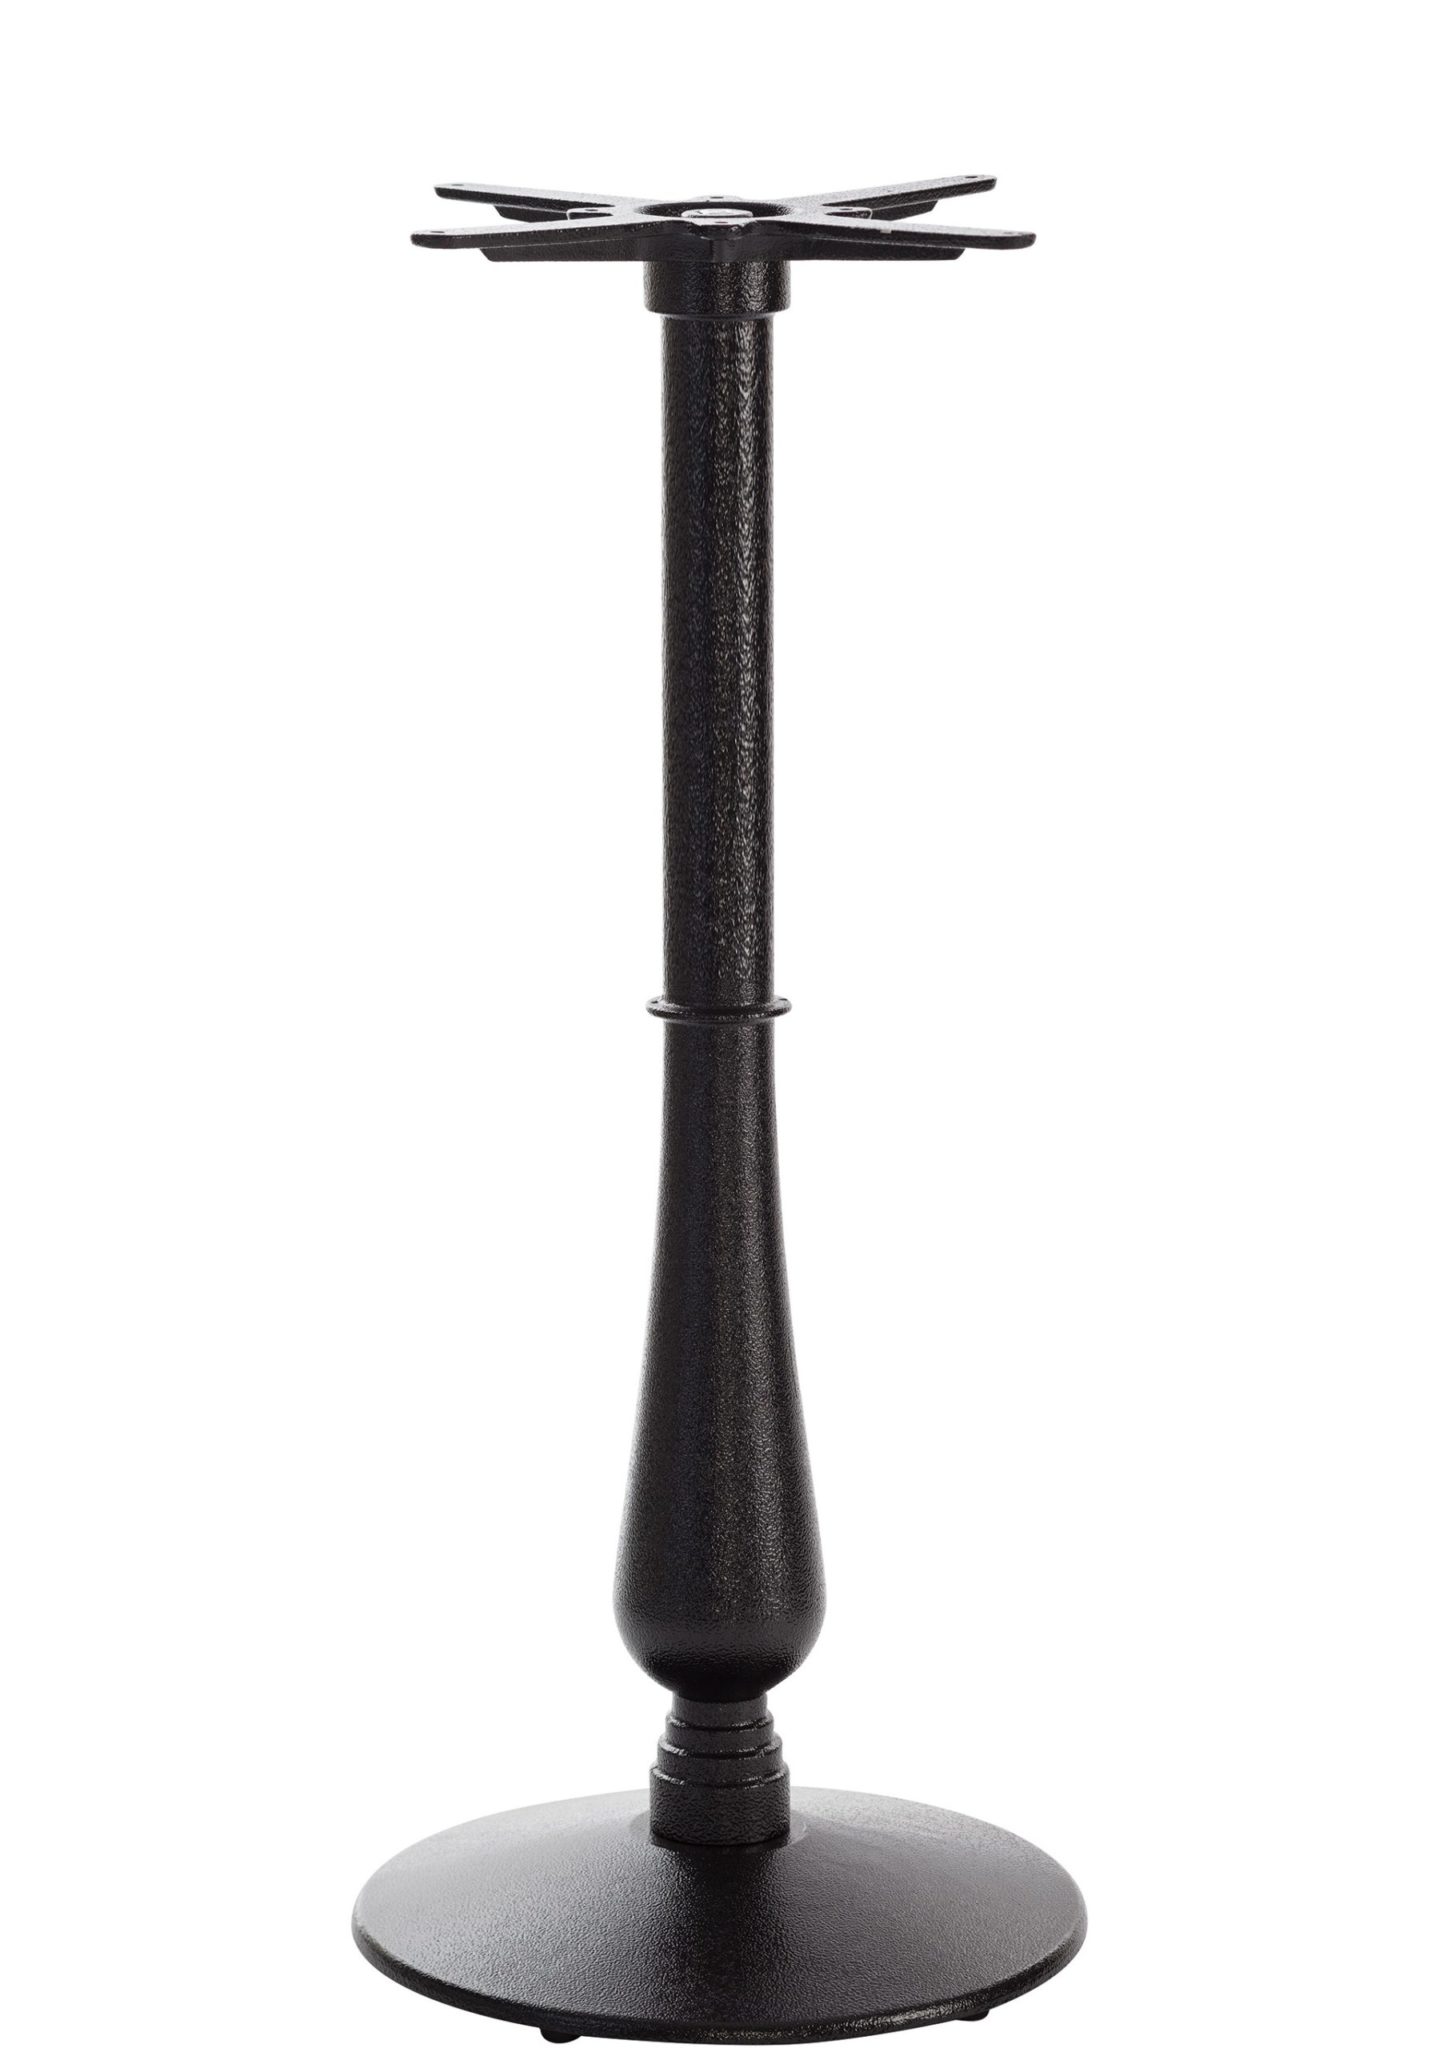 Black Cast Iron Candelabra Table Base - Medium - Poseur height - 1100 mm